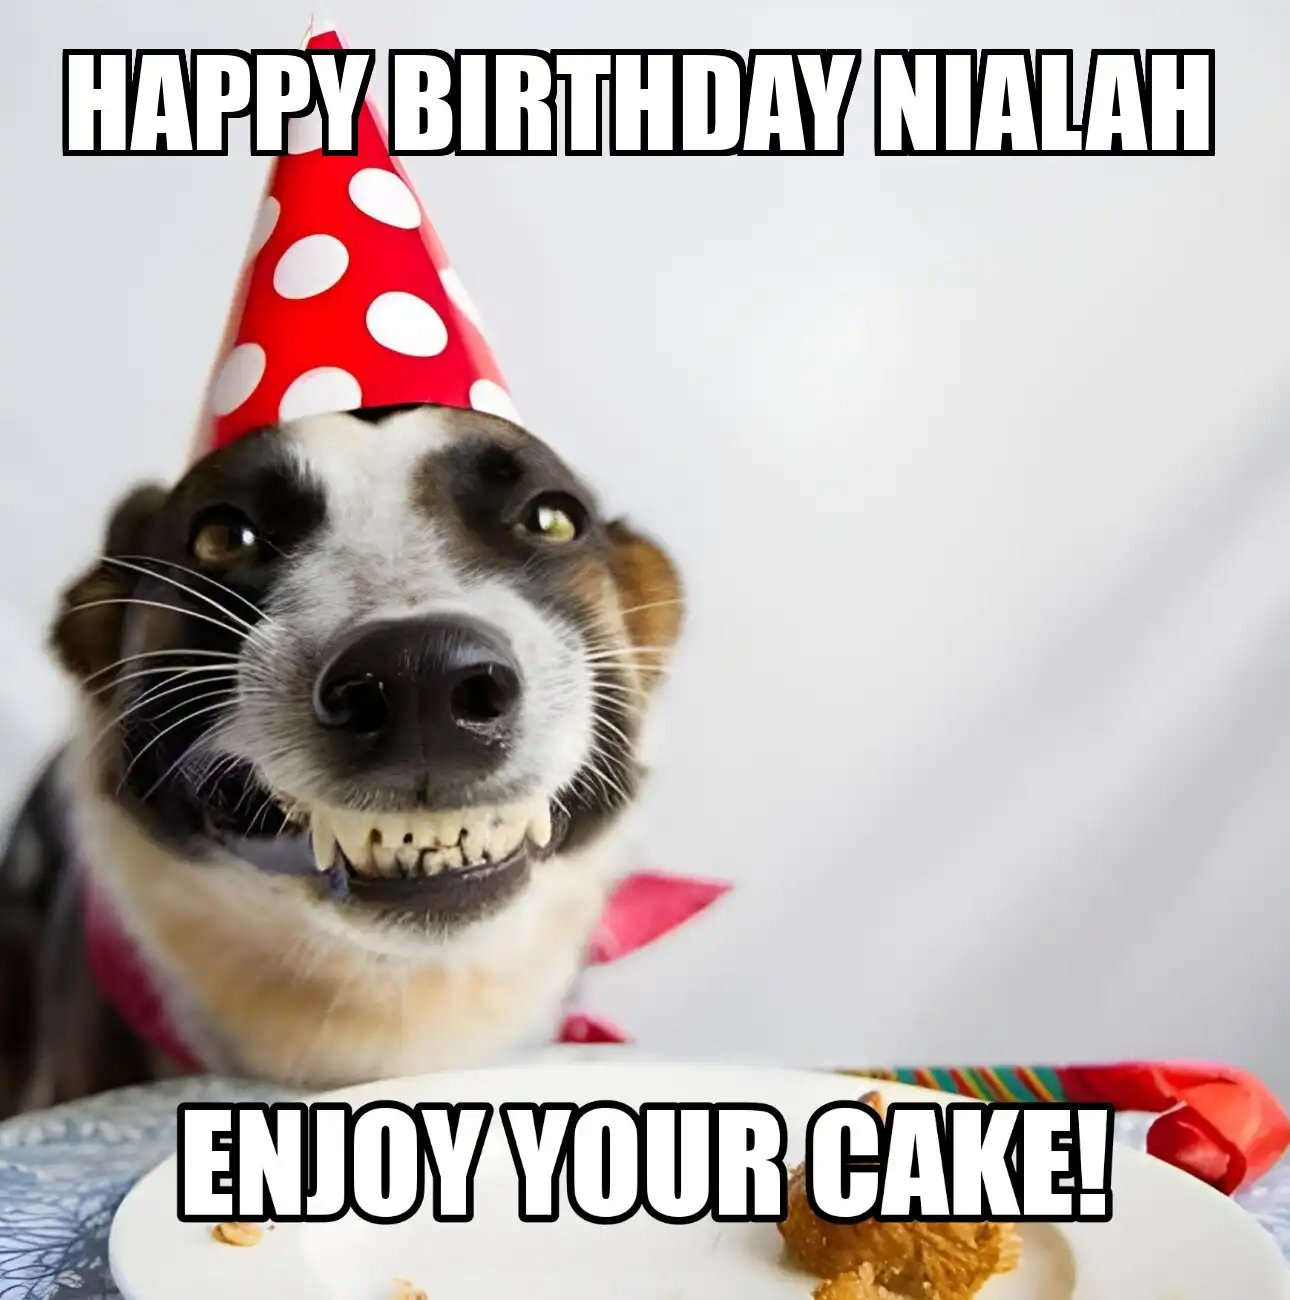 Happy Birthday Nialah Enjoy Your Cake Dog Meme